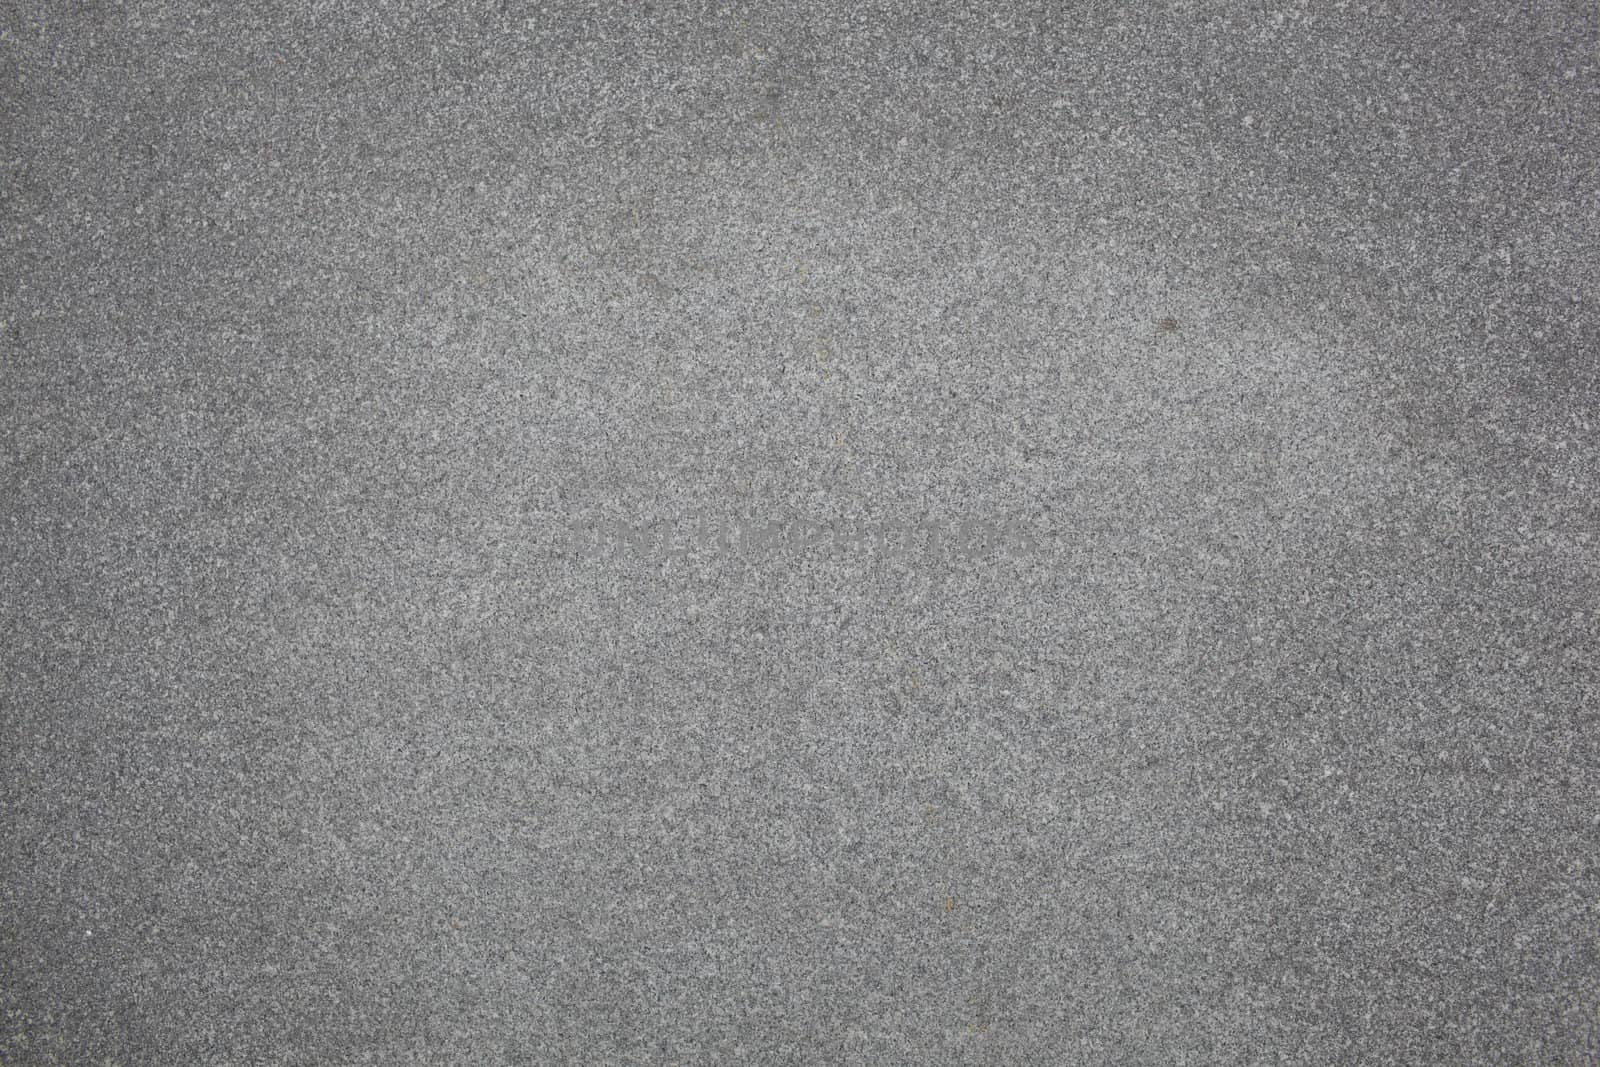 Old dark grey concrete wall texture background